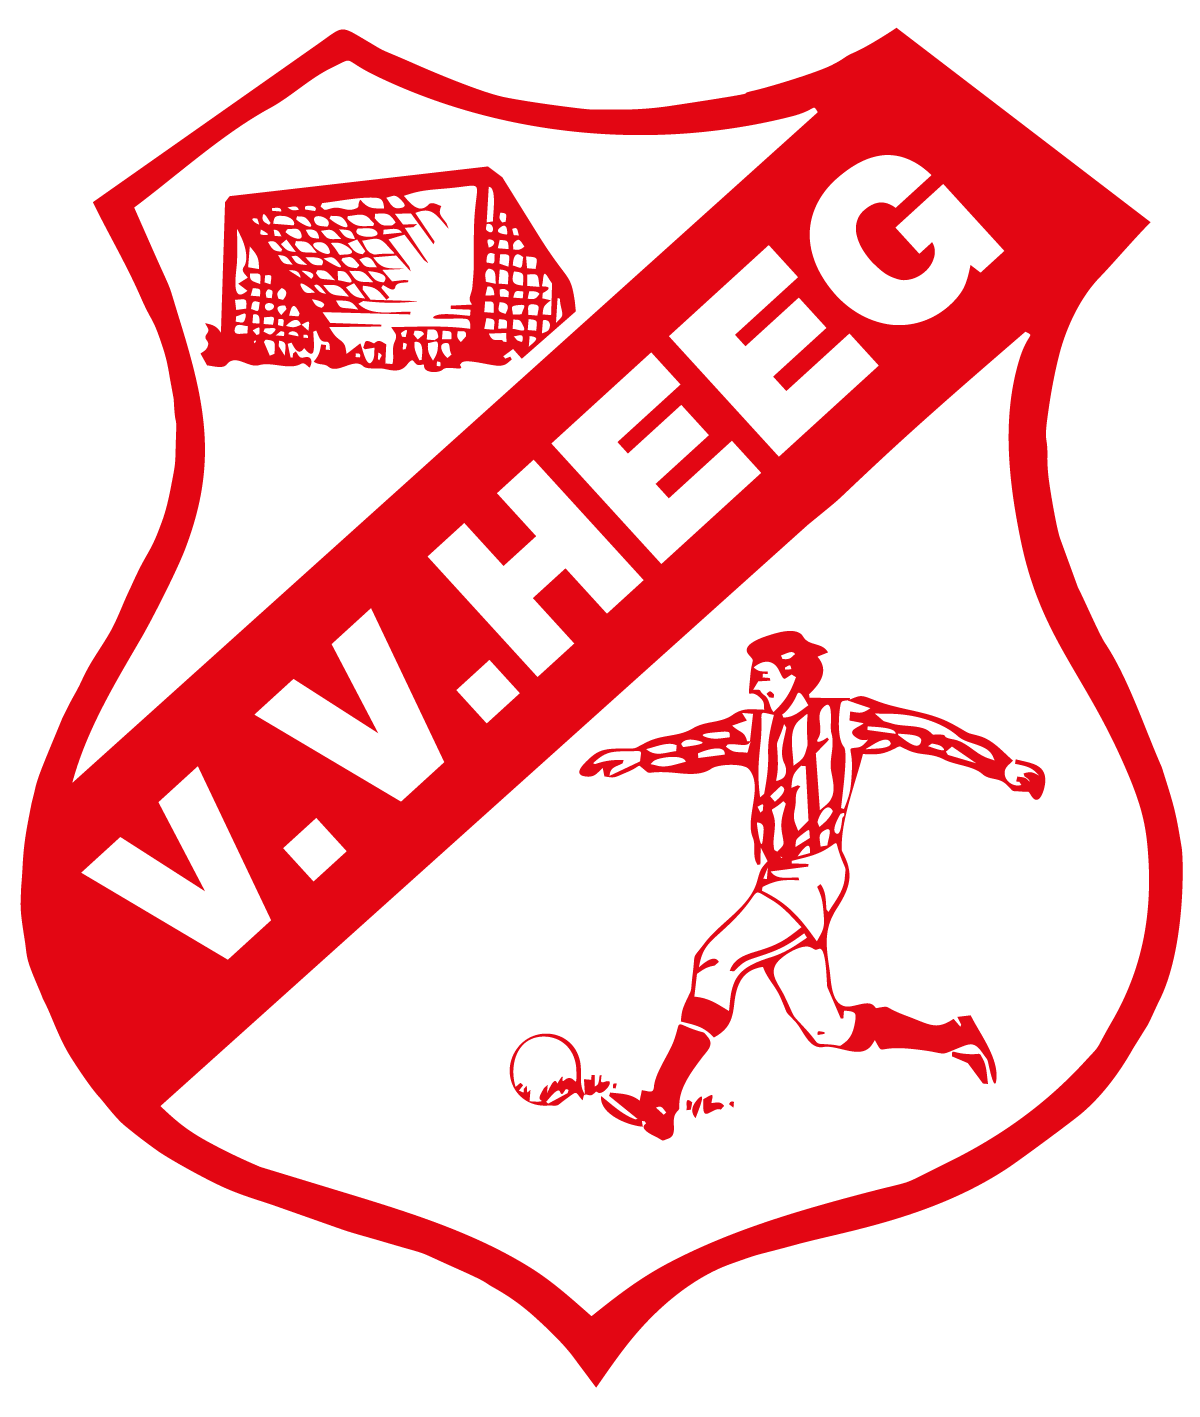 VVHeegshop Logo